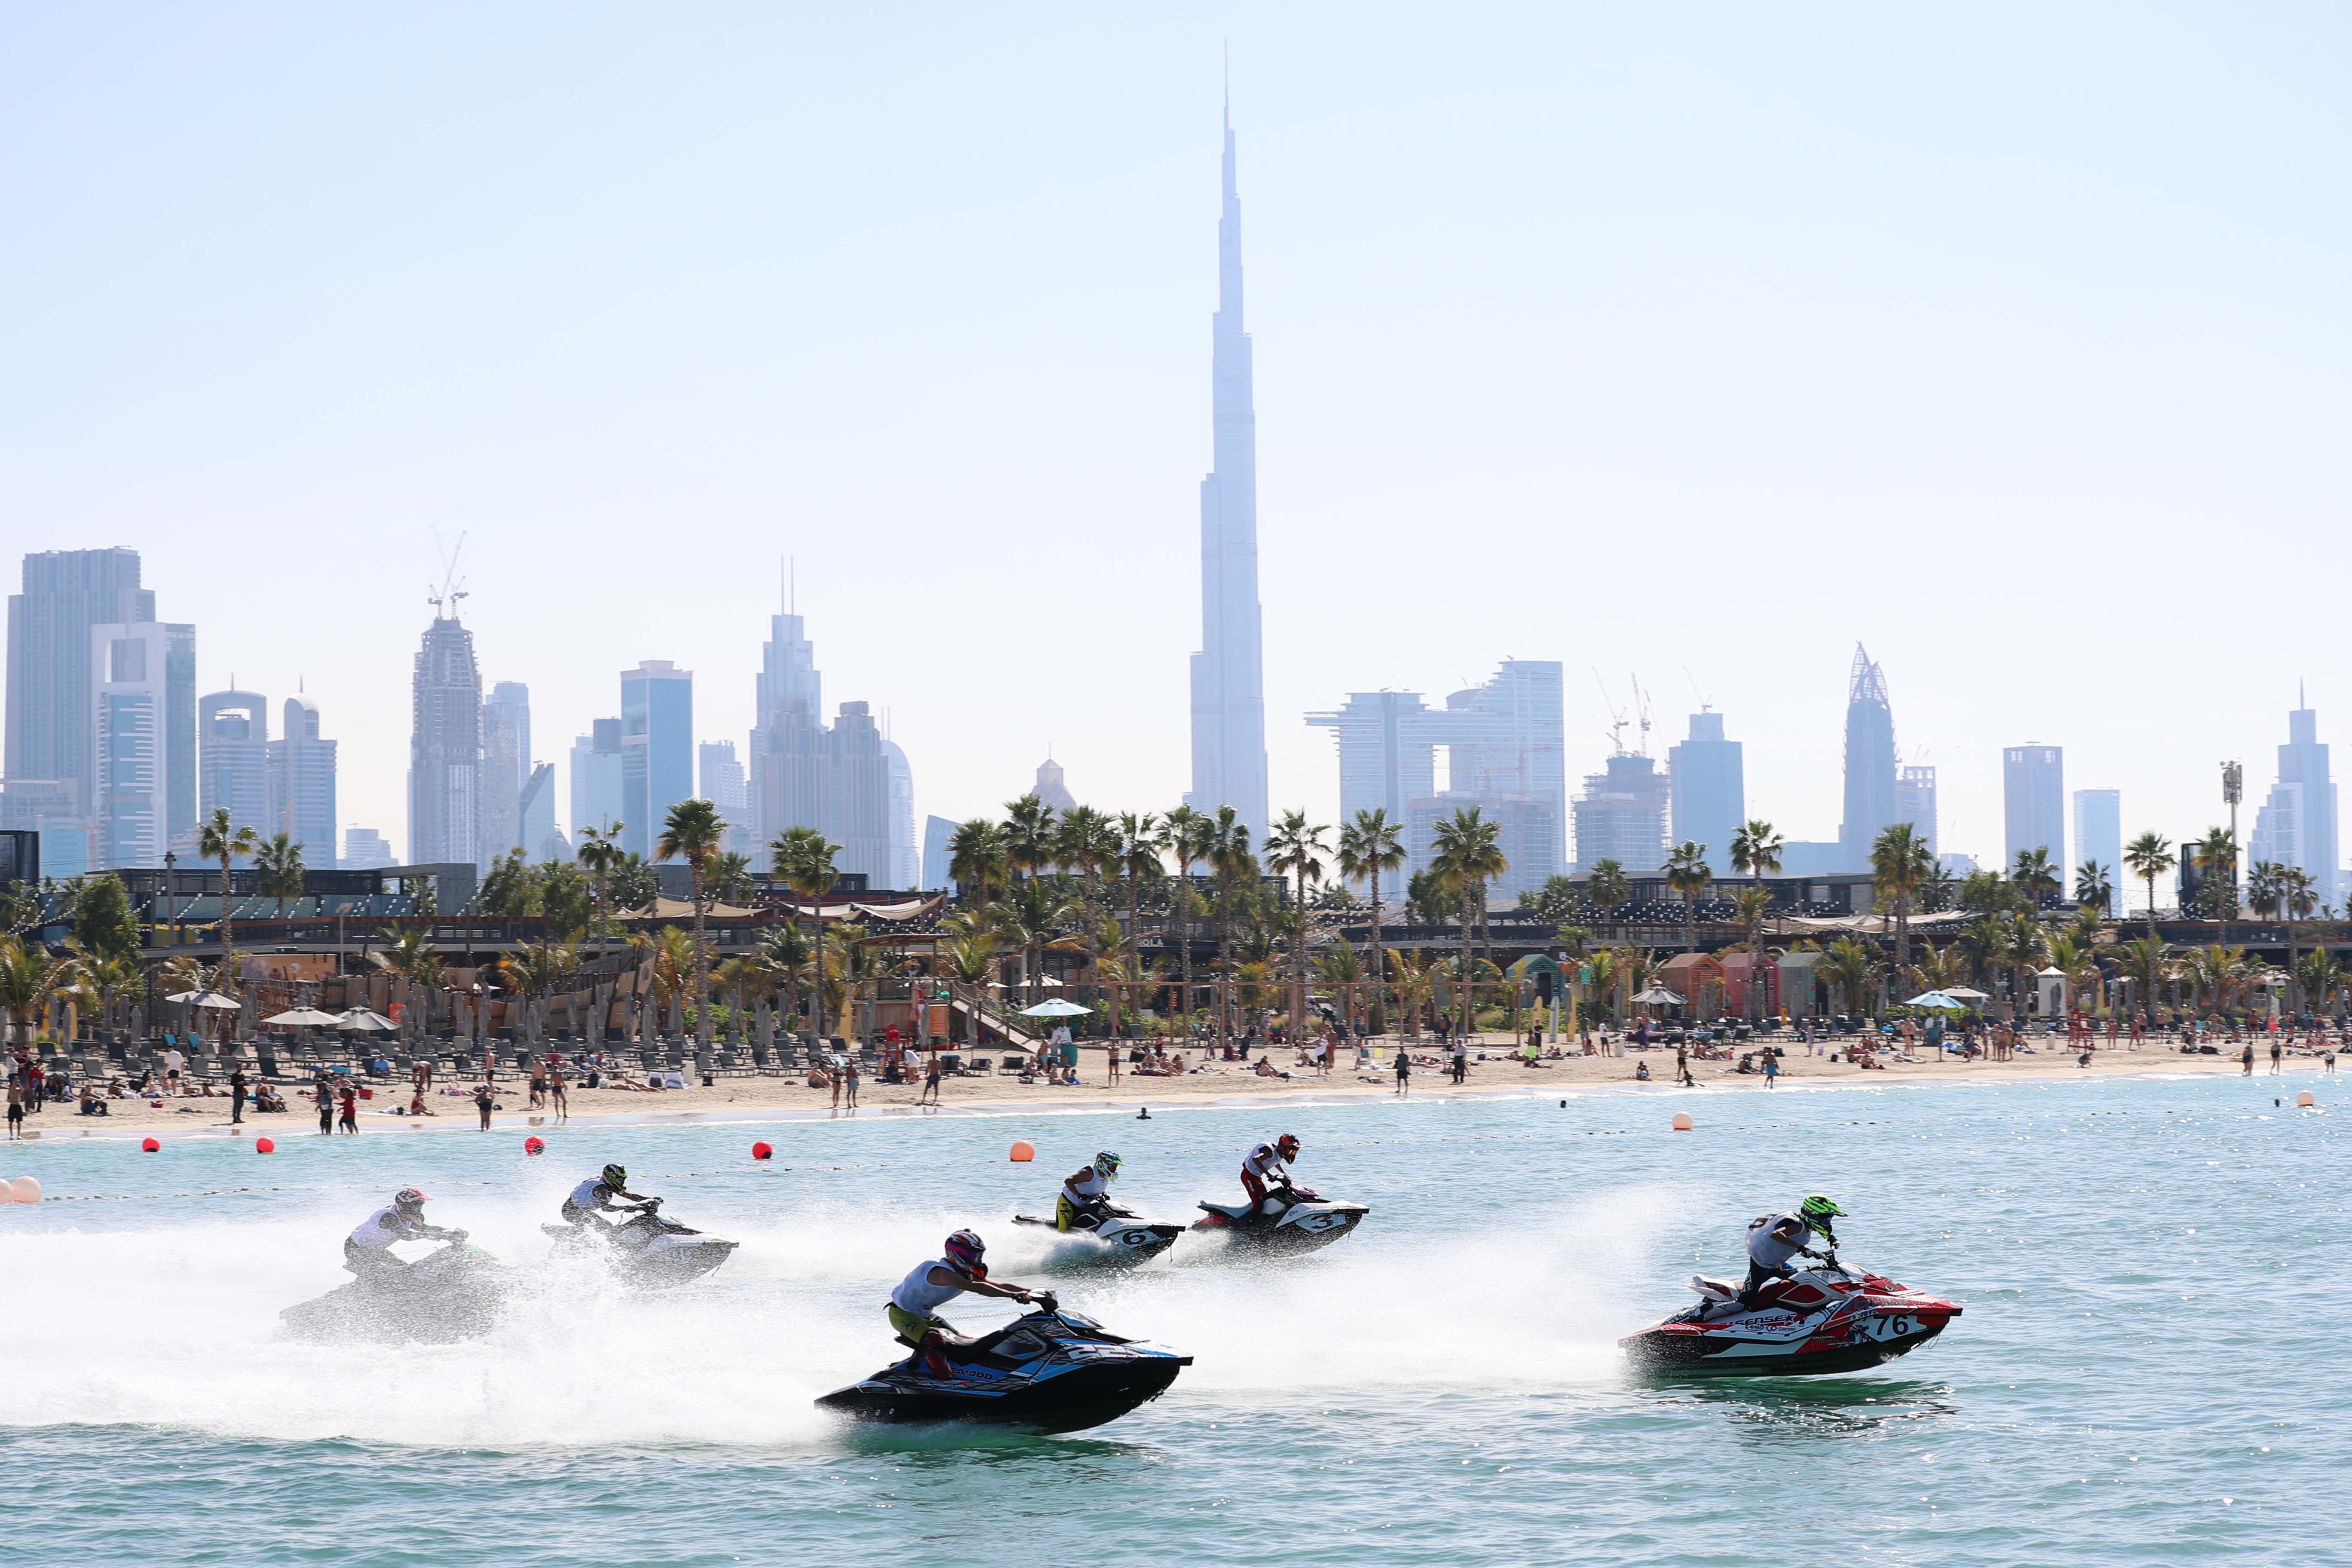 First Round of the UAE International Aquabike Race on Saturday